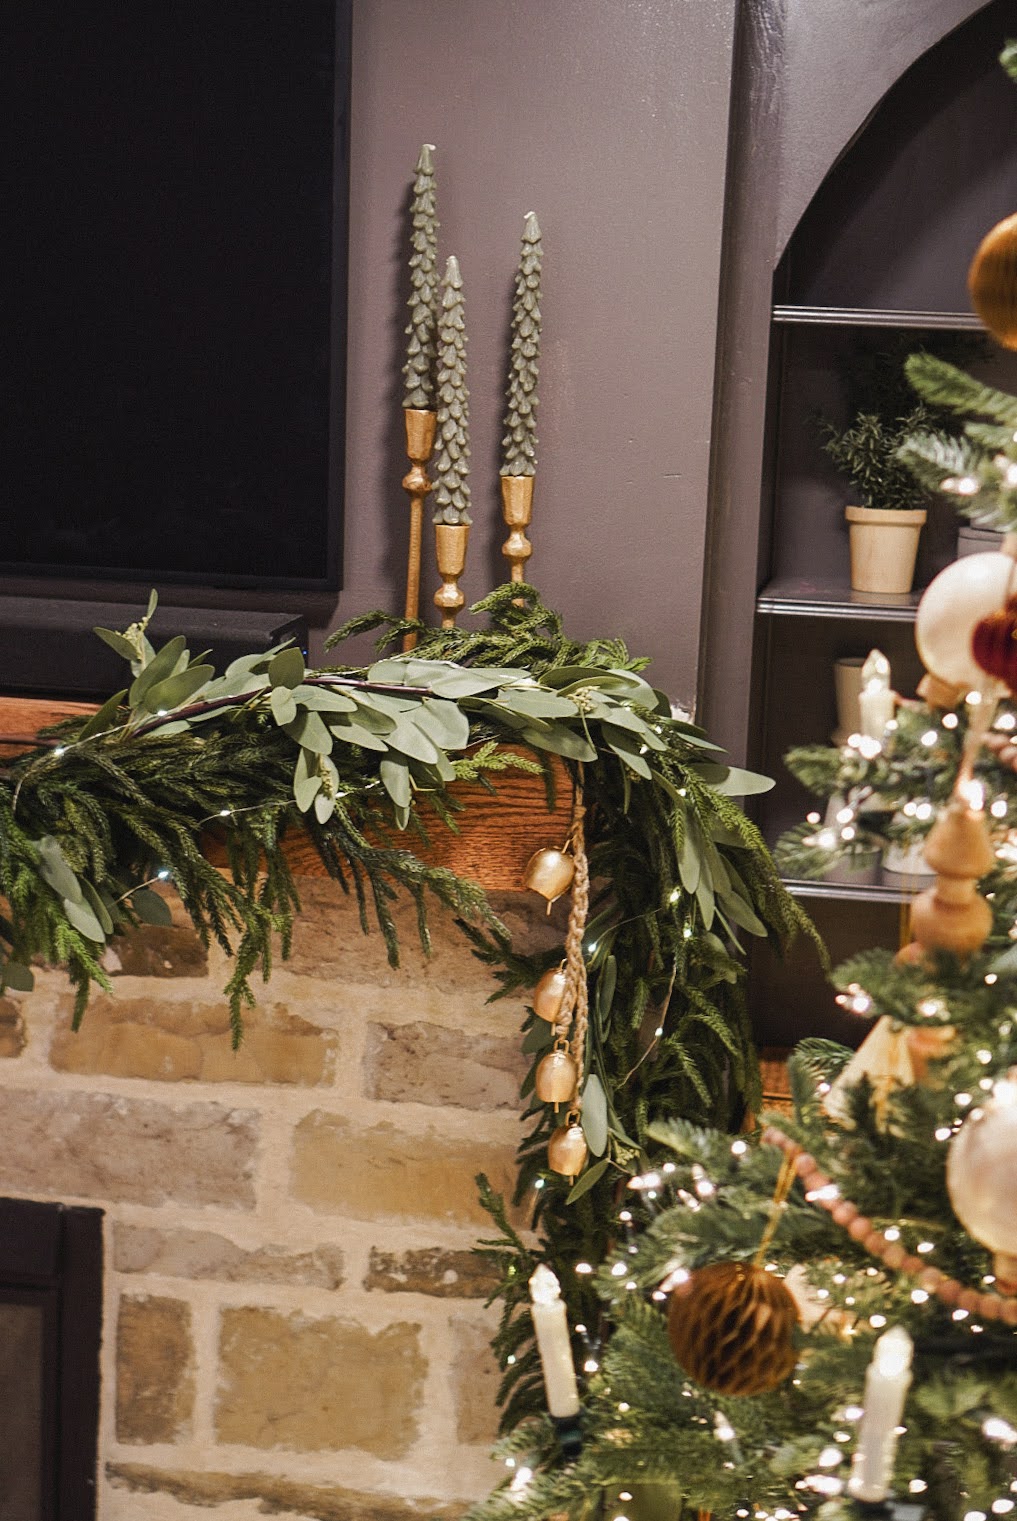 garland and Christmas candles on mantel with traditional Christmas decor